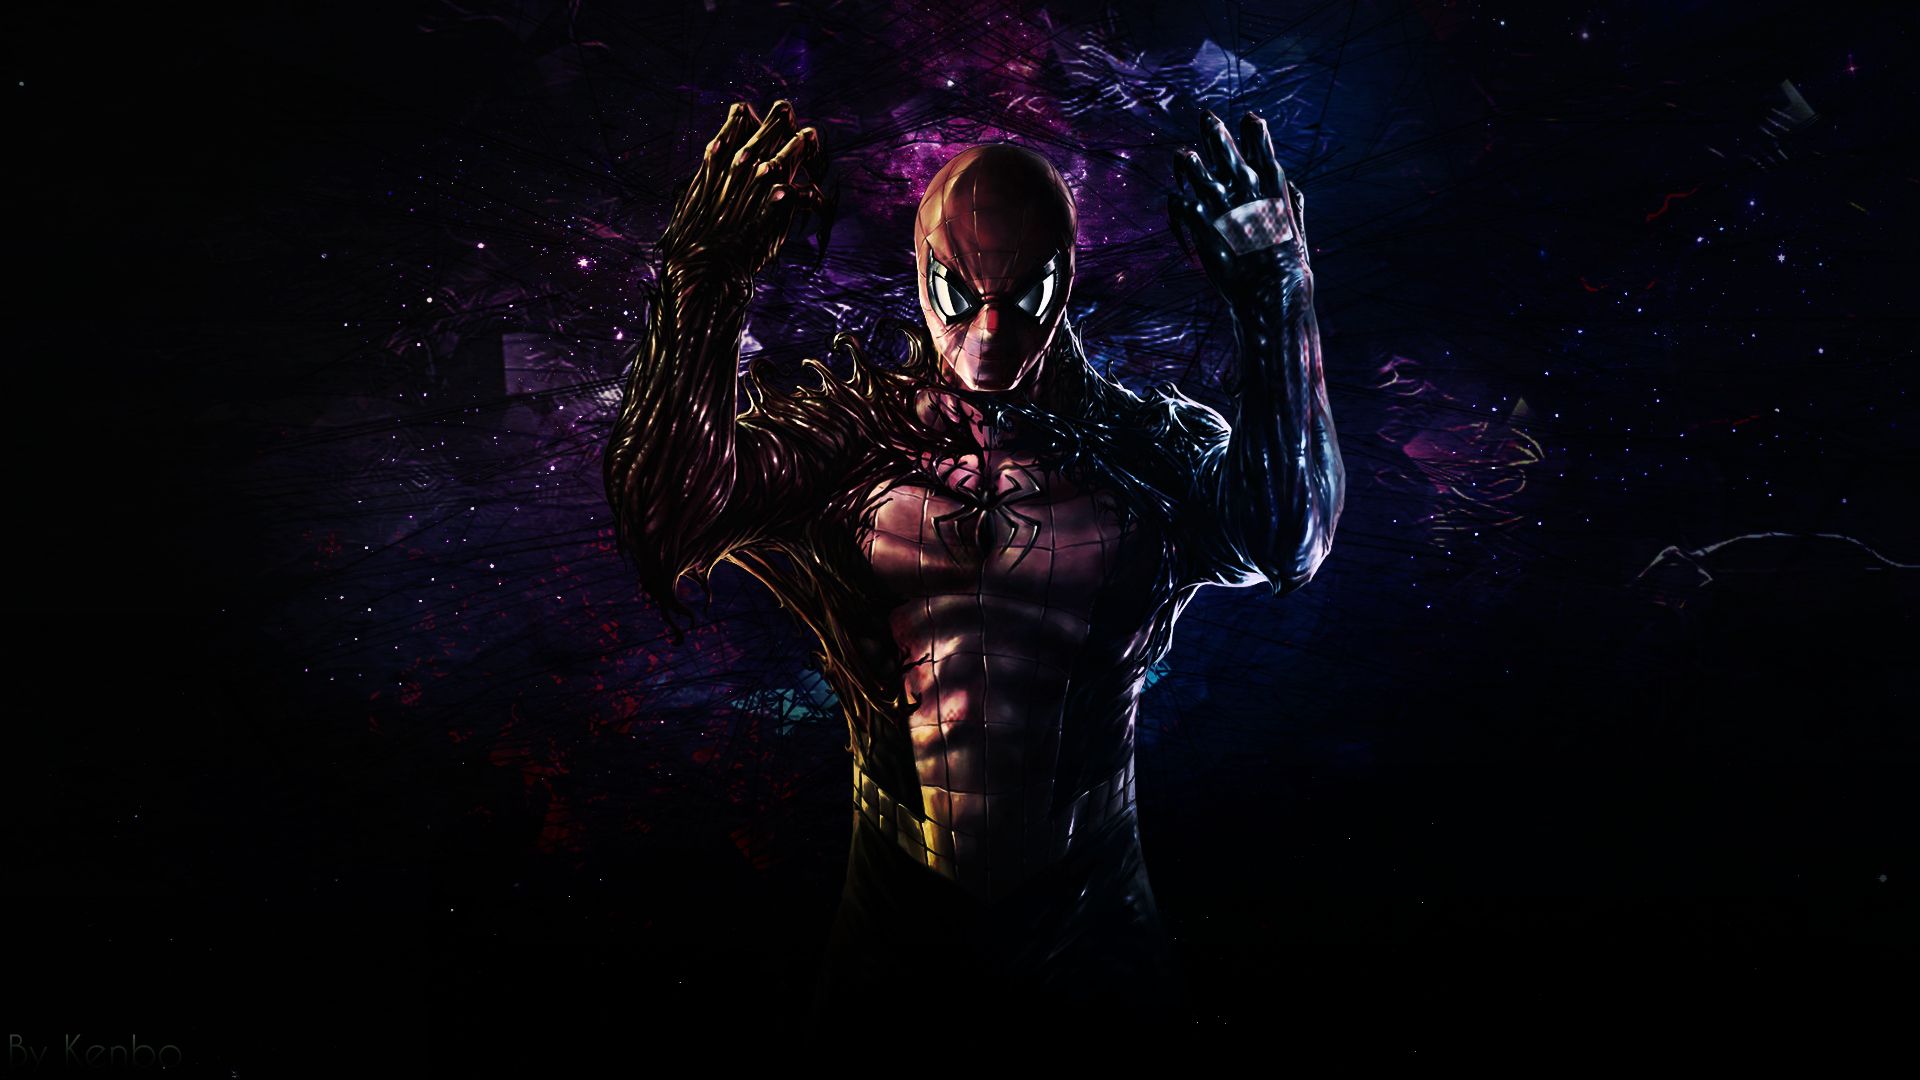 Venom Spider Man Comicbook Wallpaper, HD Superheroes 4K Wallpaper, Image, Photo And Background